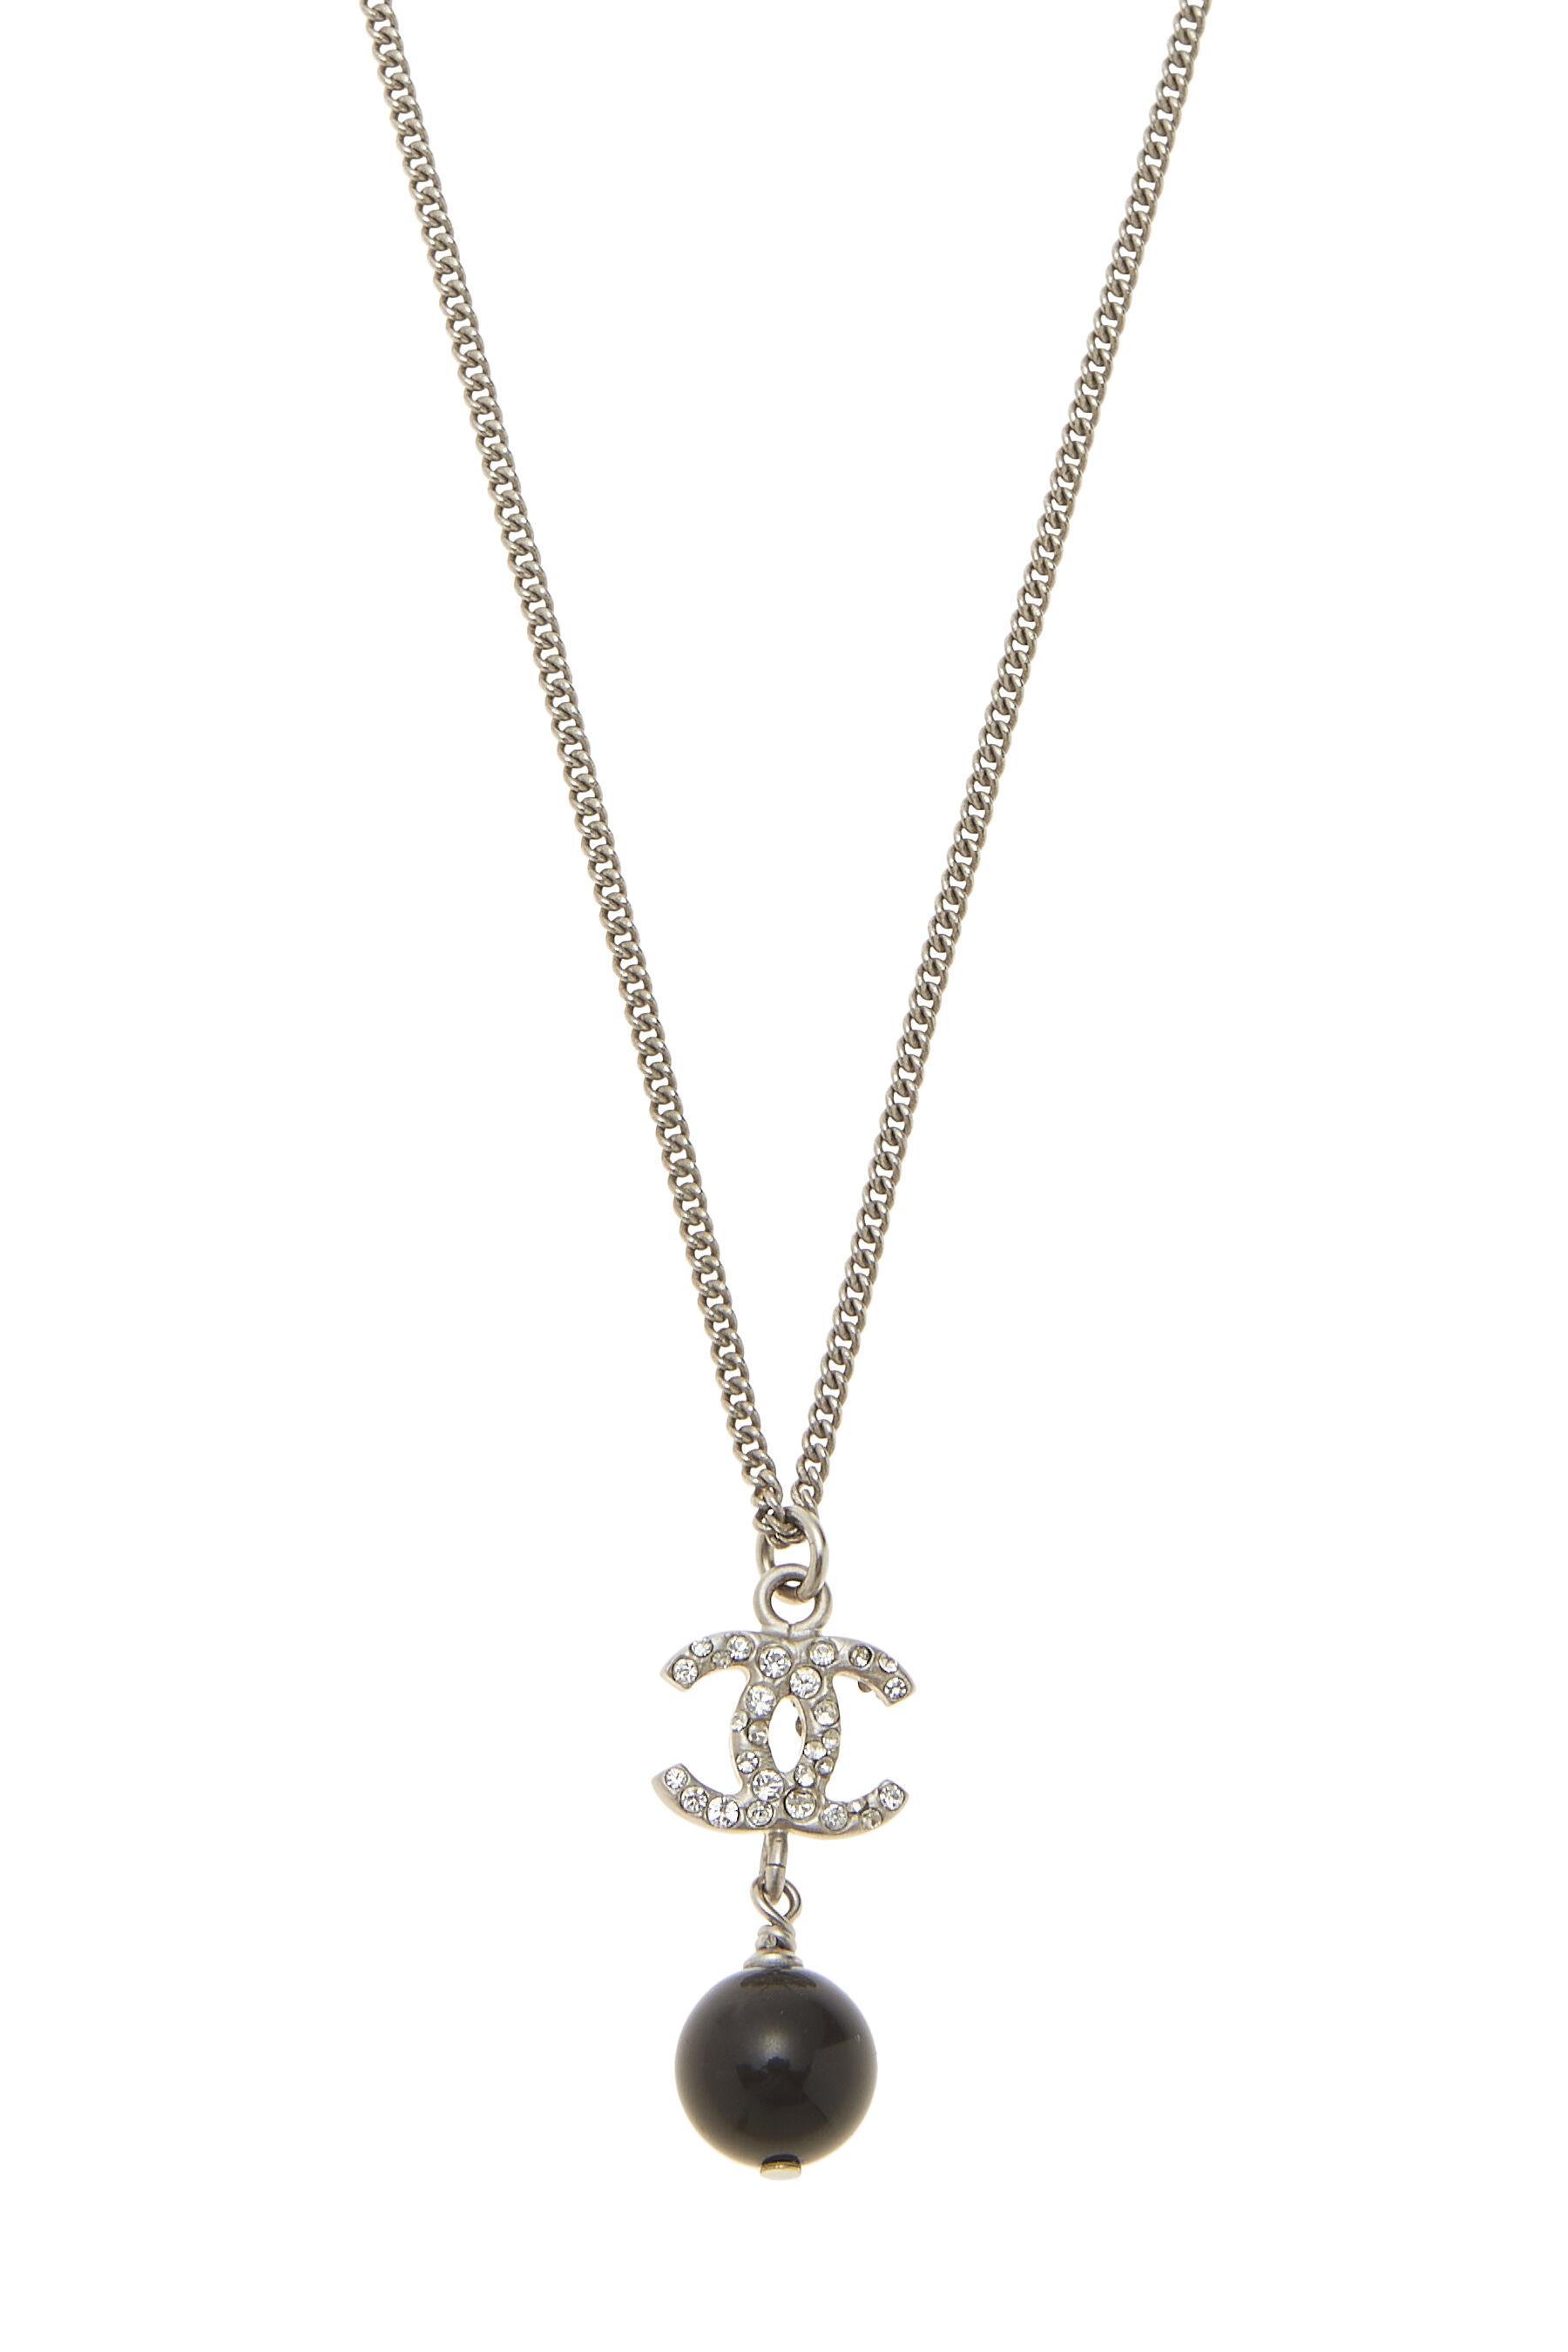 chanel black silver chain necklace